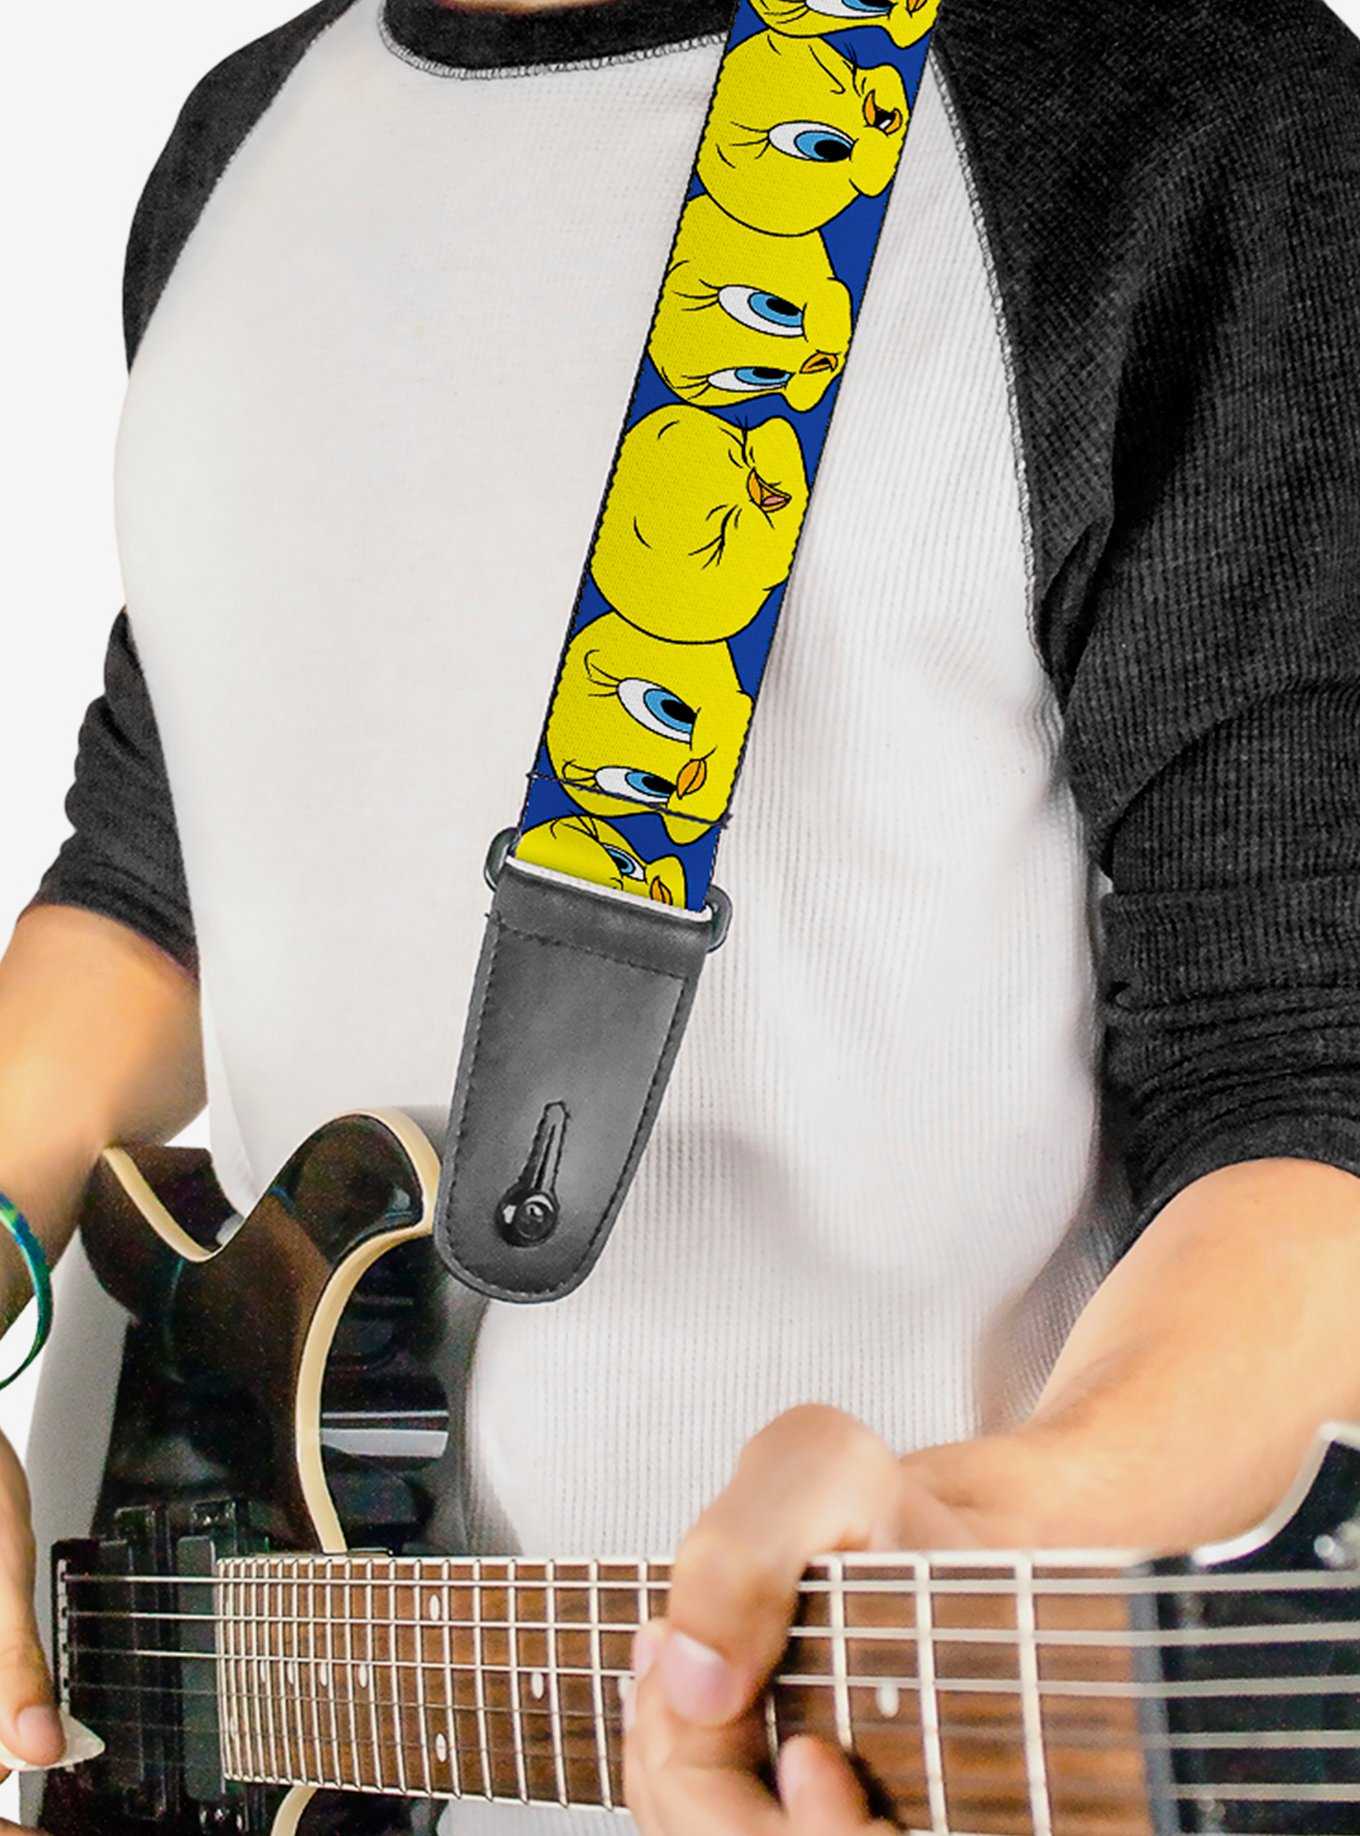 Looney Tunes Tweety Bird Close Up Guitar Strap, , hi-res